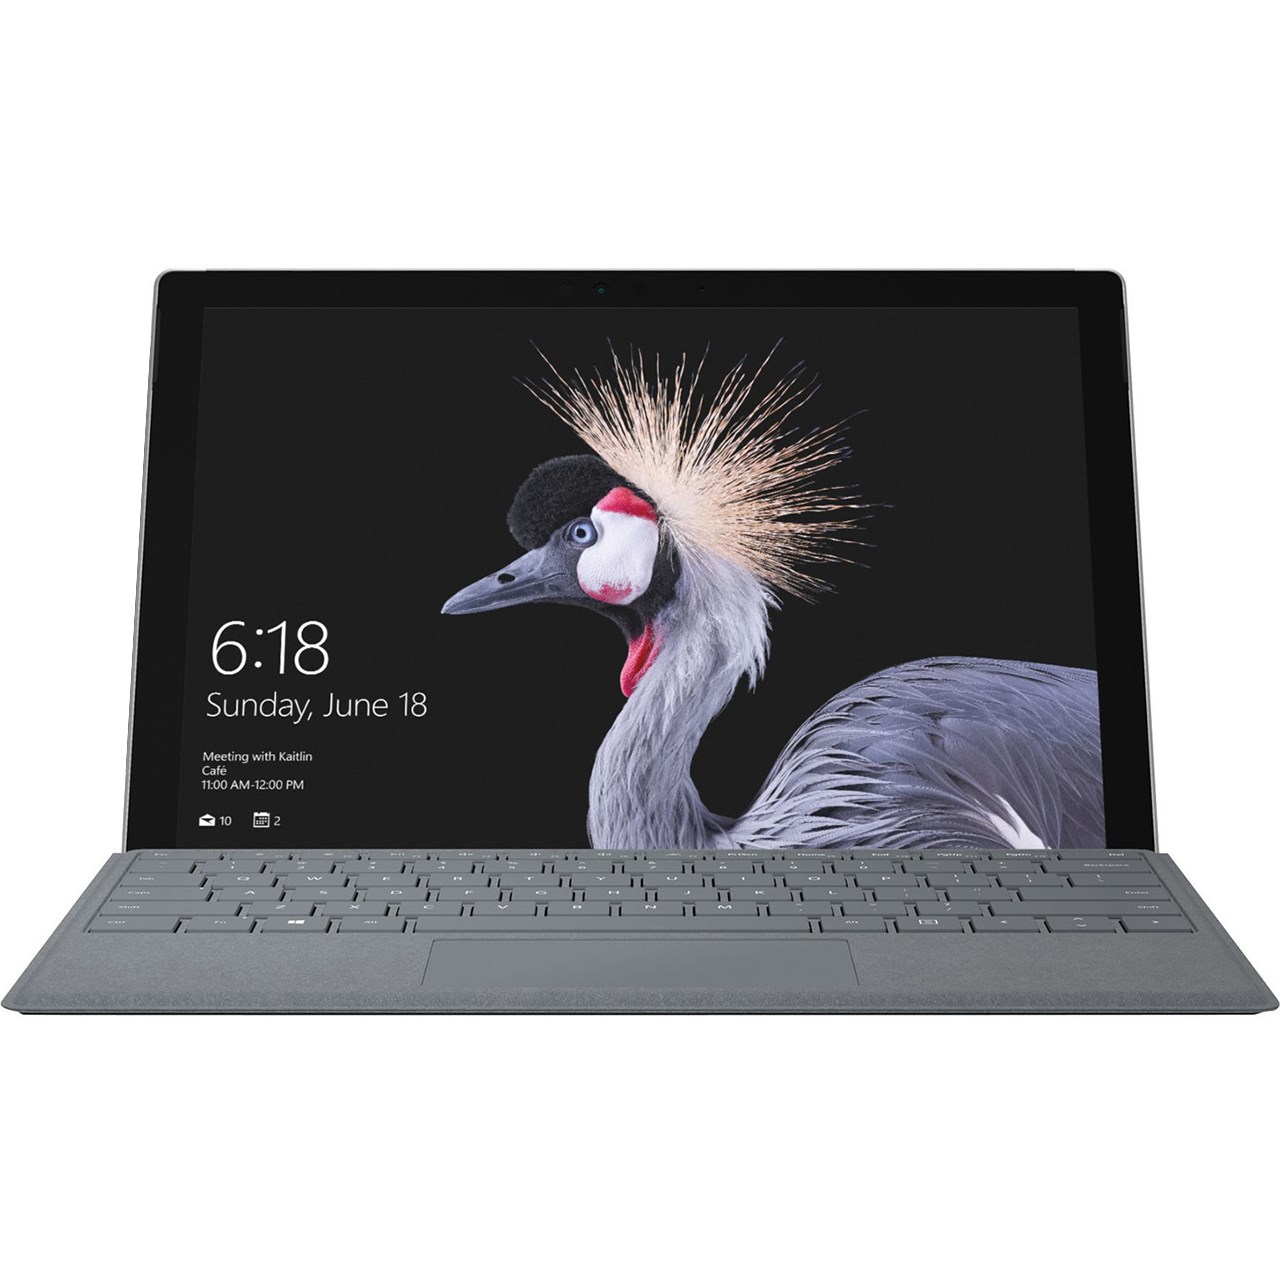 تبلت مایکروسافت مدل Surface Pro 2017 - C به همراه کیبورد سیگنیچر رنگ پلاتینیوم و کیف چرم صنوبر  - ظرفیت 256 گیگابایت